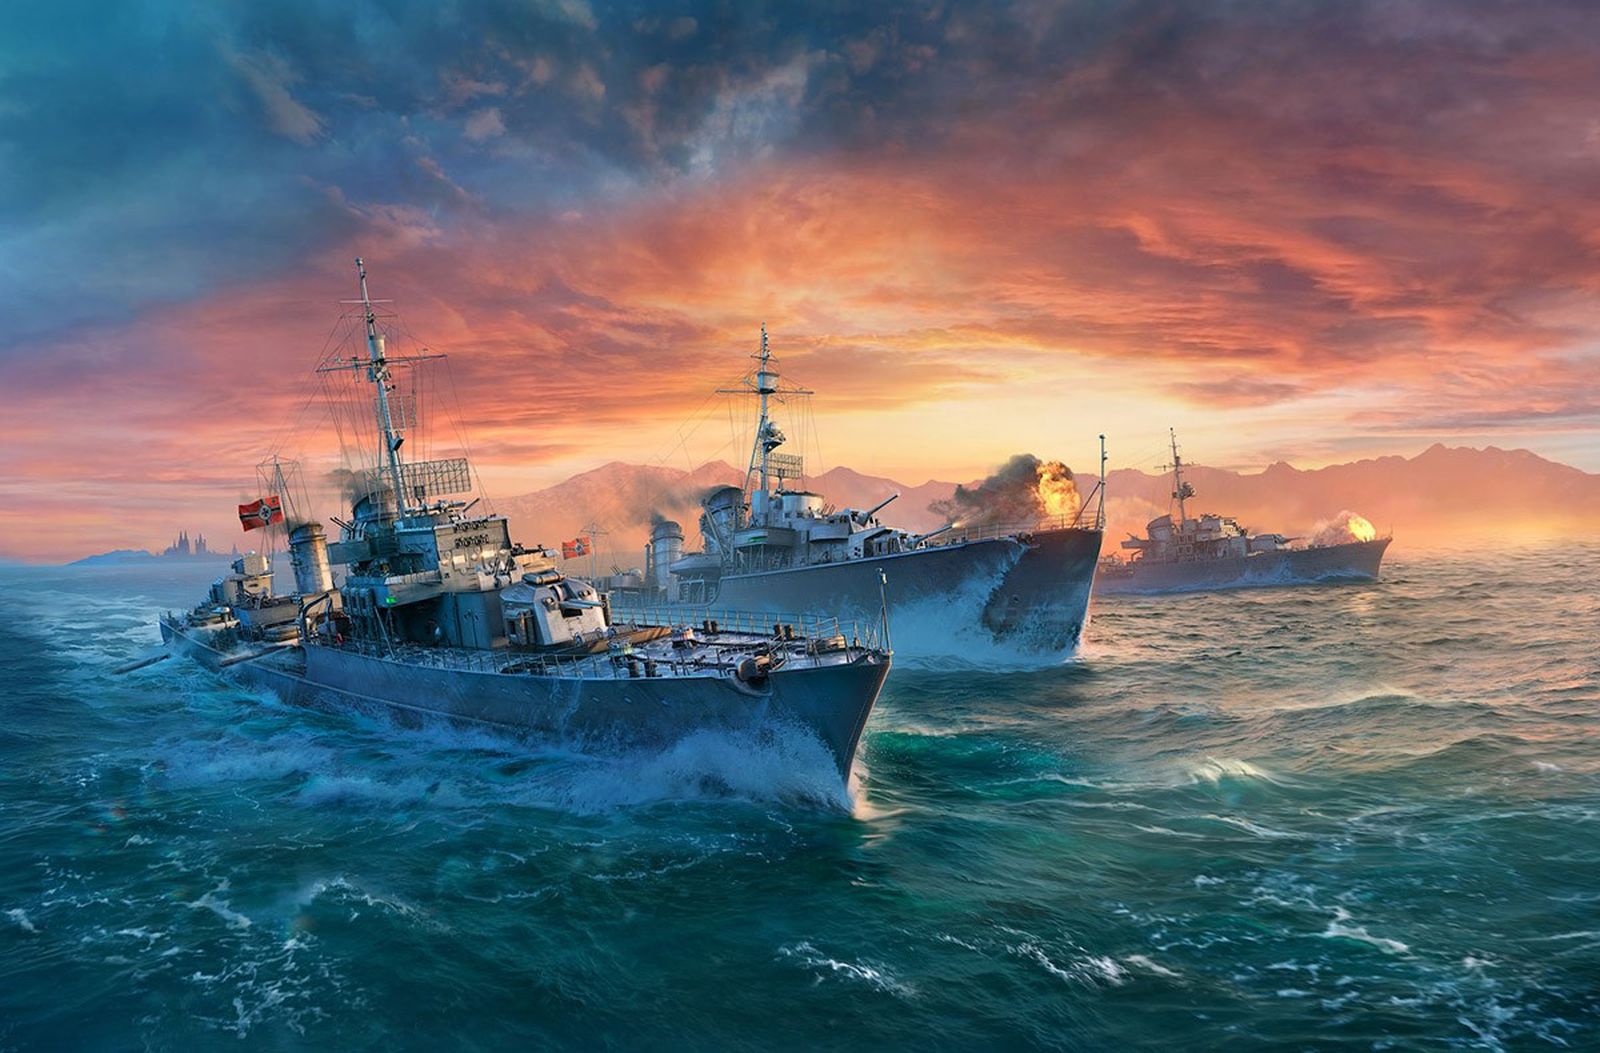 world of warships latest update